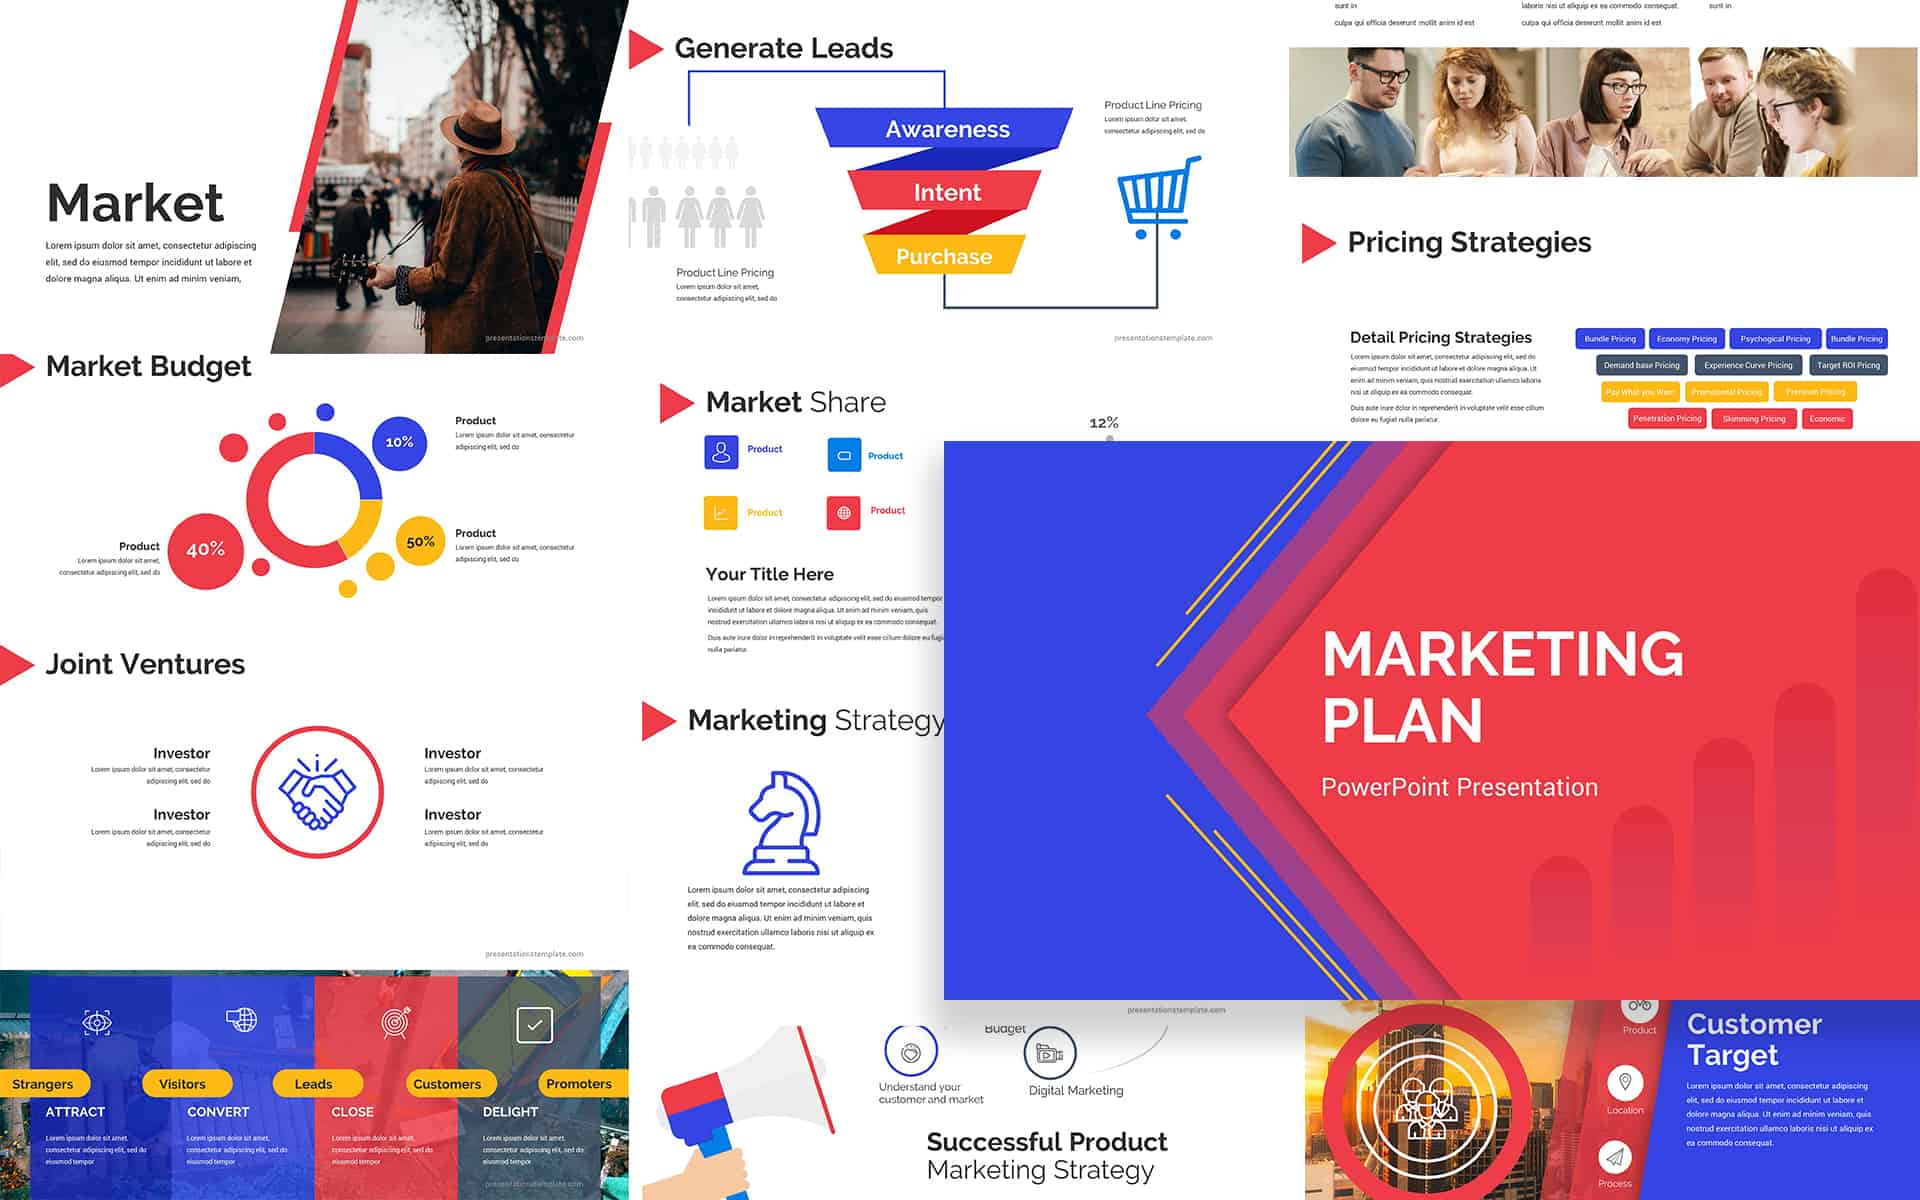 Marketing Plan PPT Template Download Marketing Plan Template ppt , Marketing Plan PowerPoint Presentation Download